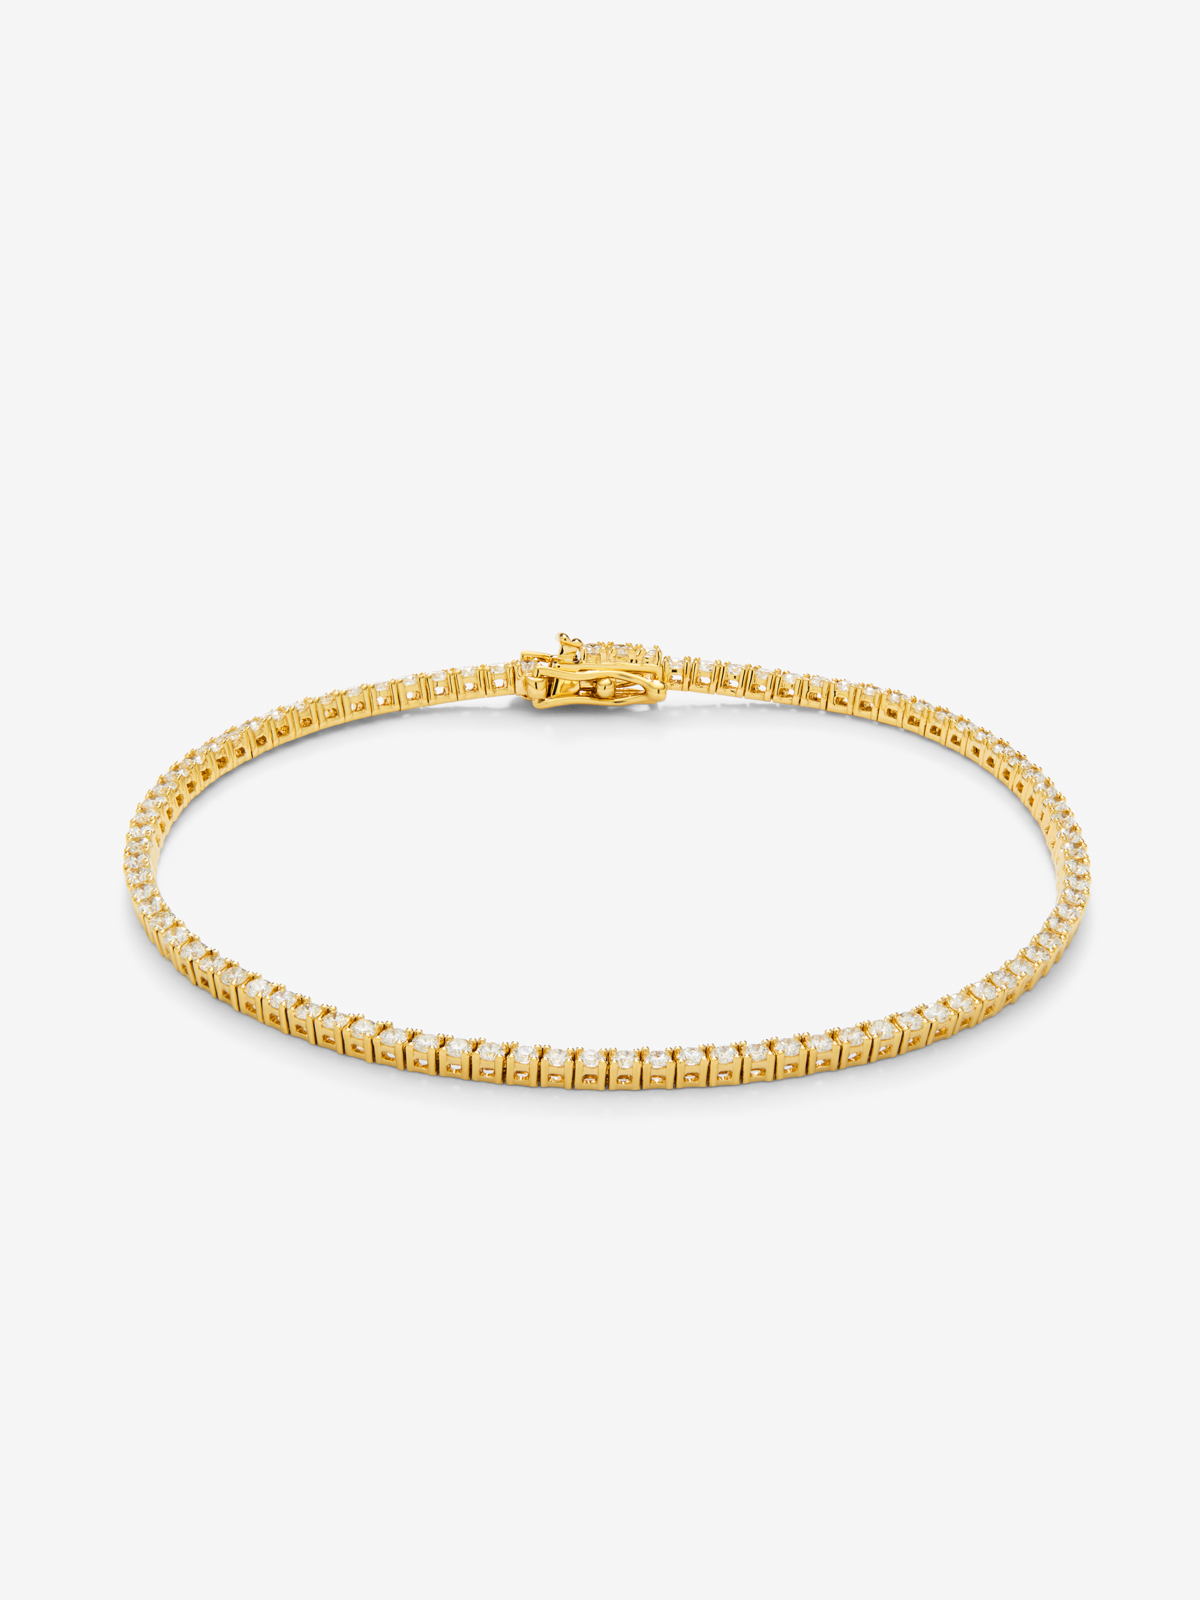 18K yellow gold rivière bracelet with white 1.65 cts bright diamonds